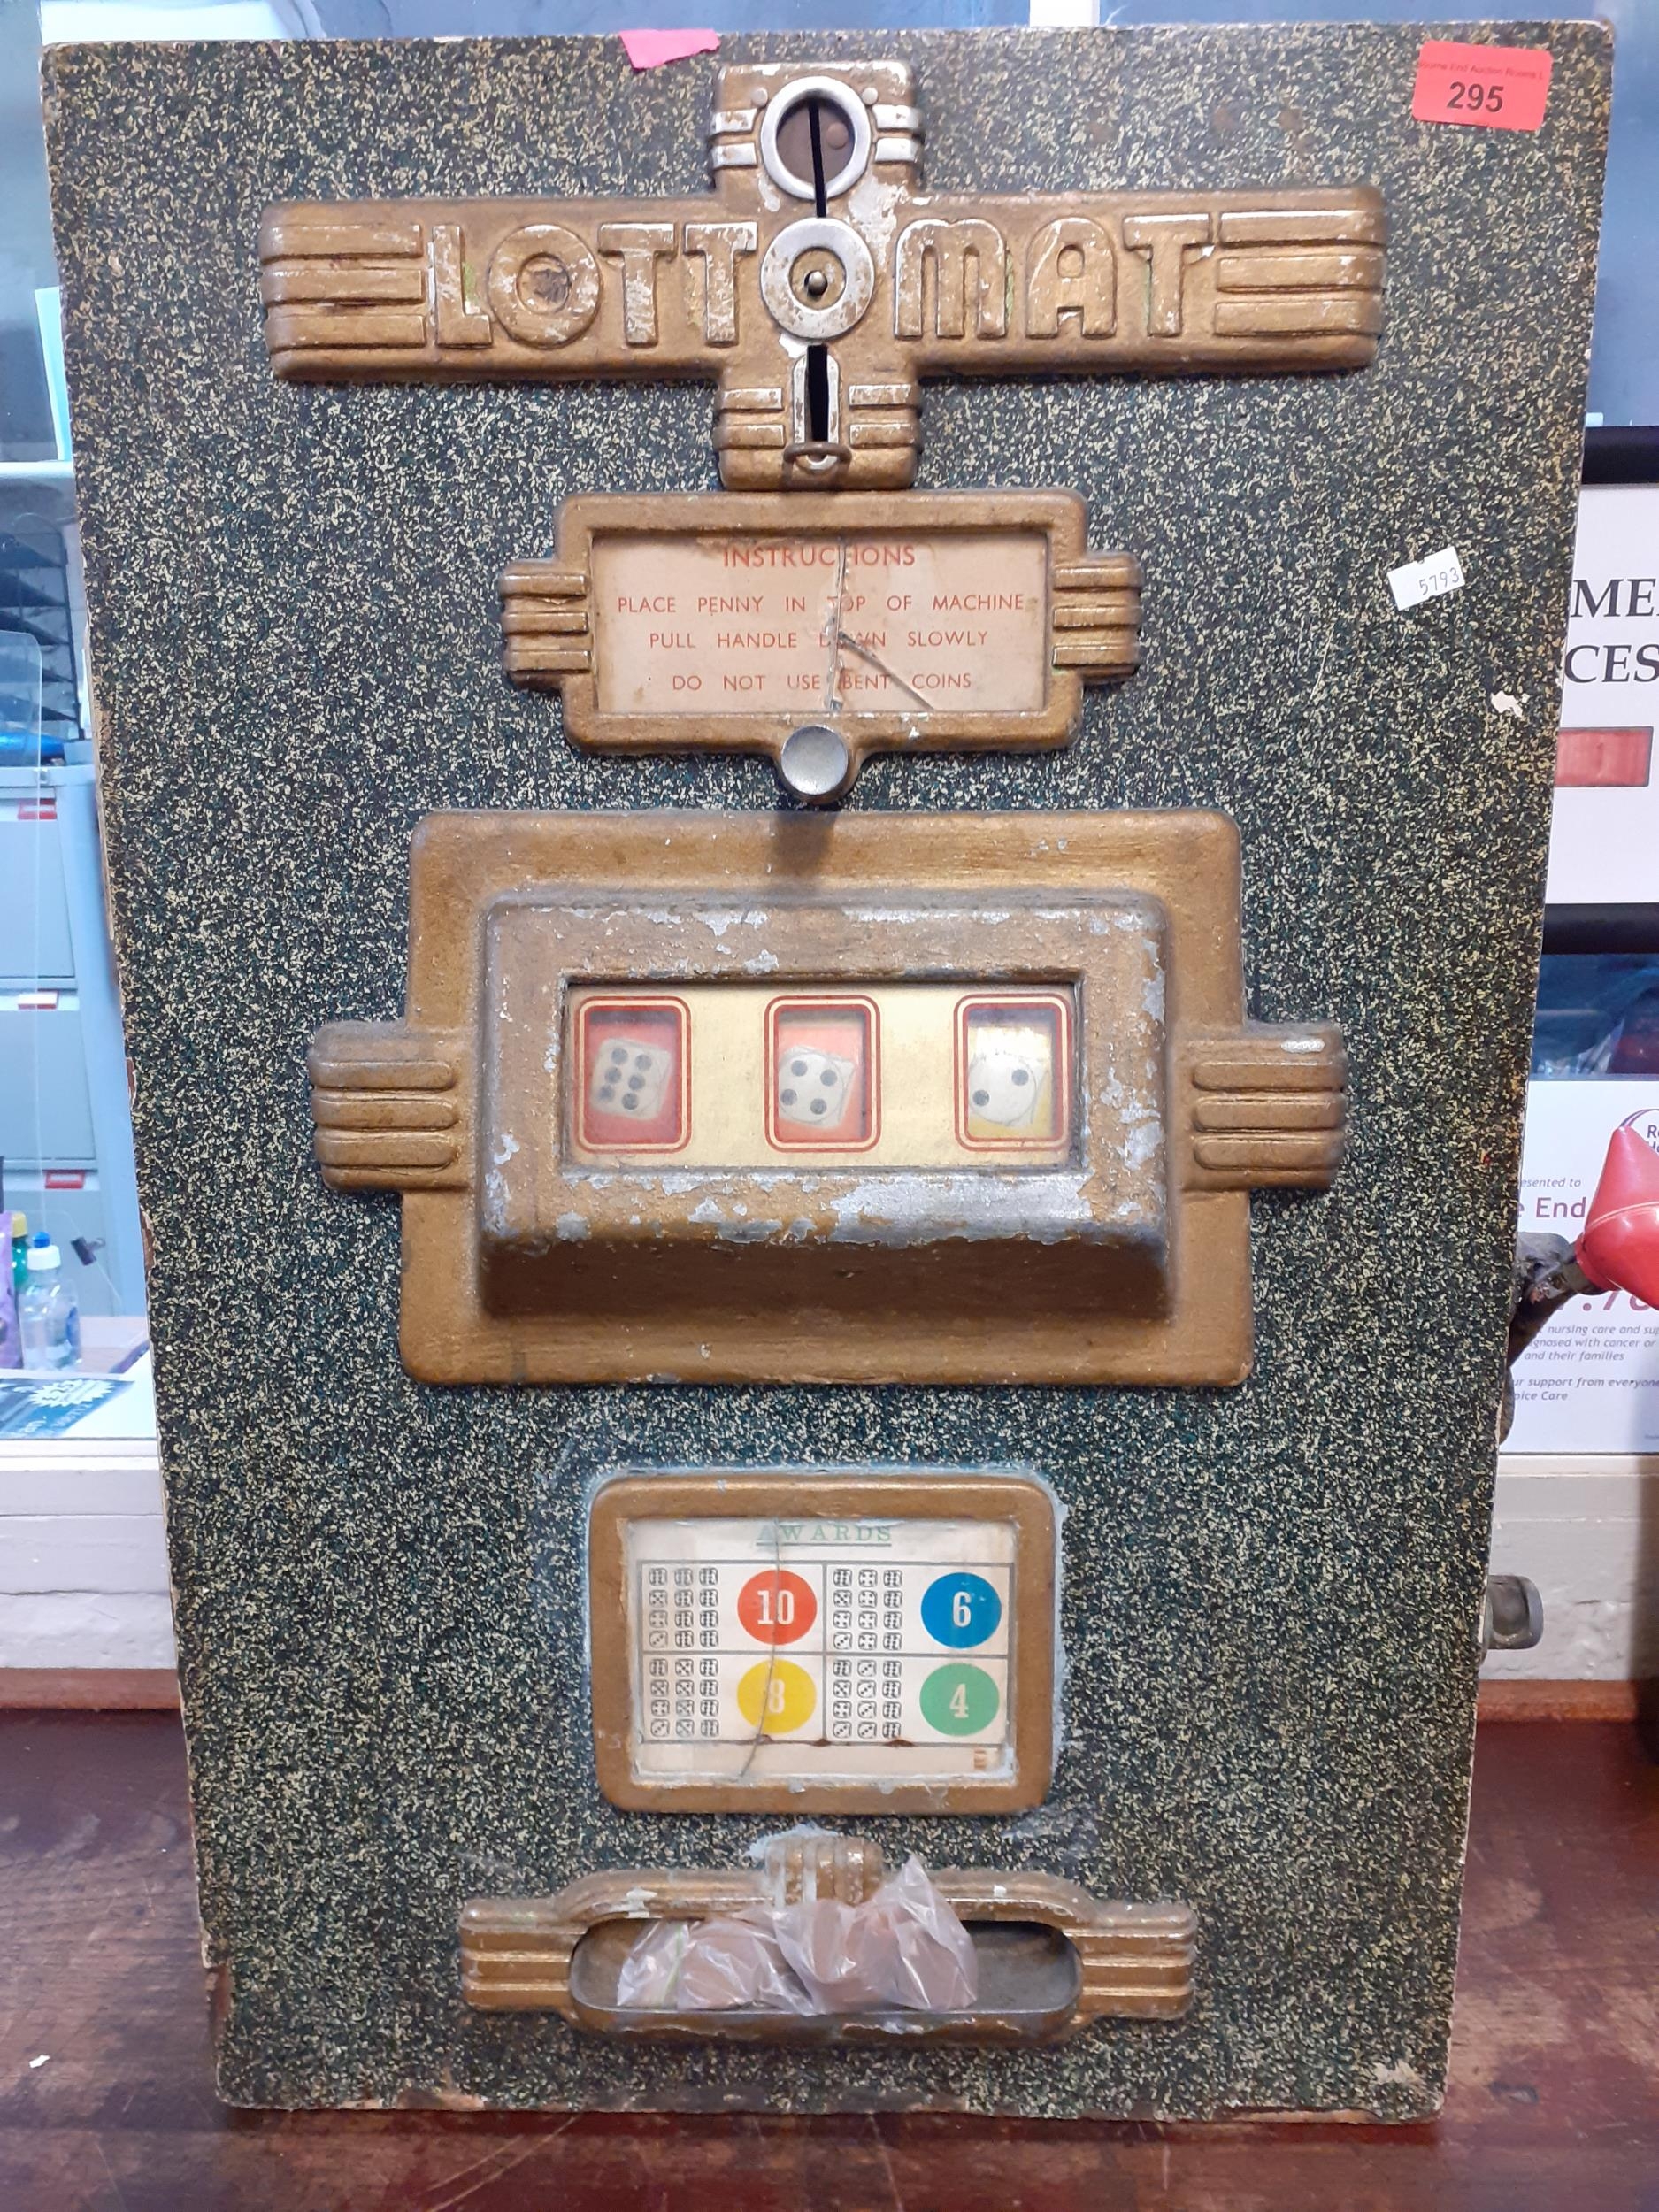 A Lottmate penny slot machine A/F Location: Foyer